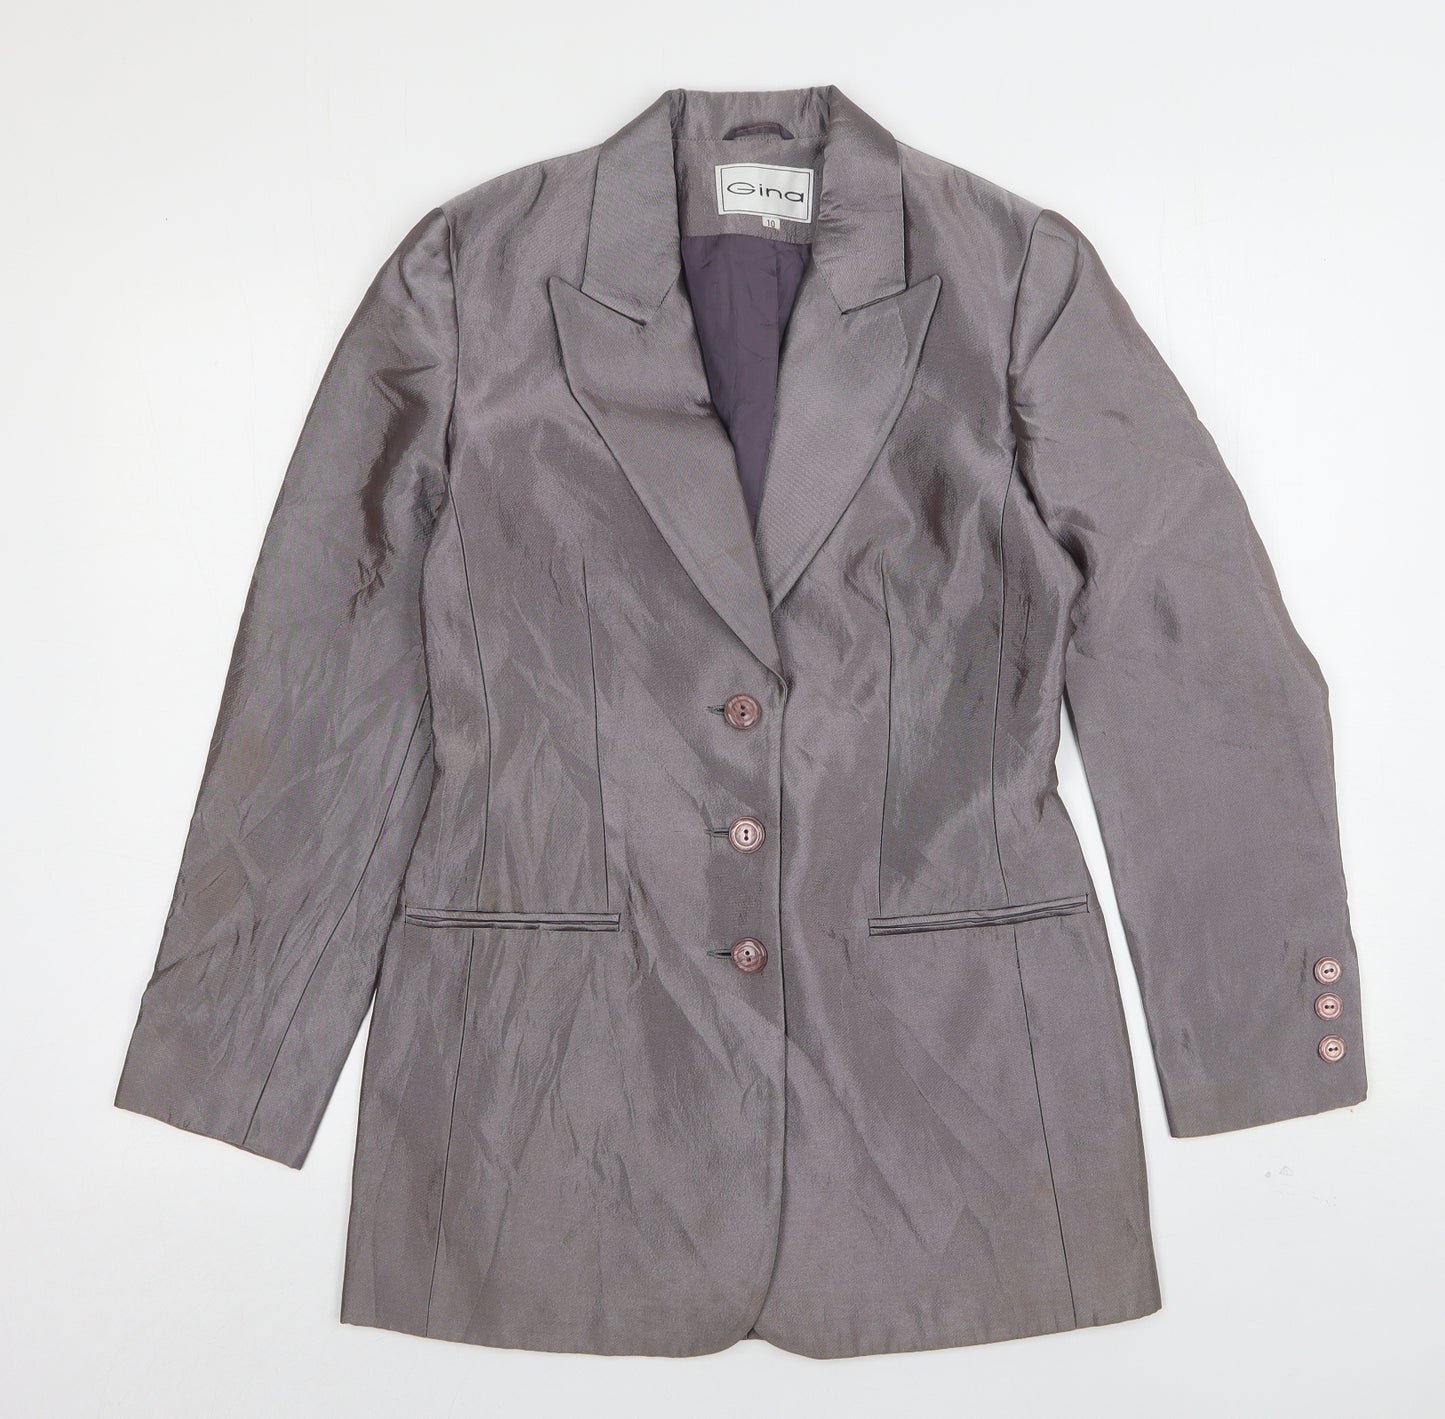 Gina  Womens Silver  Acetate Jacket Suit Jacket Size 10